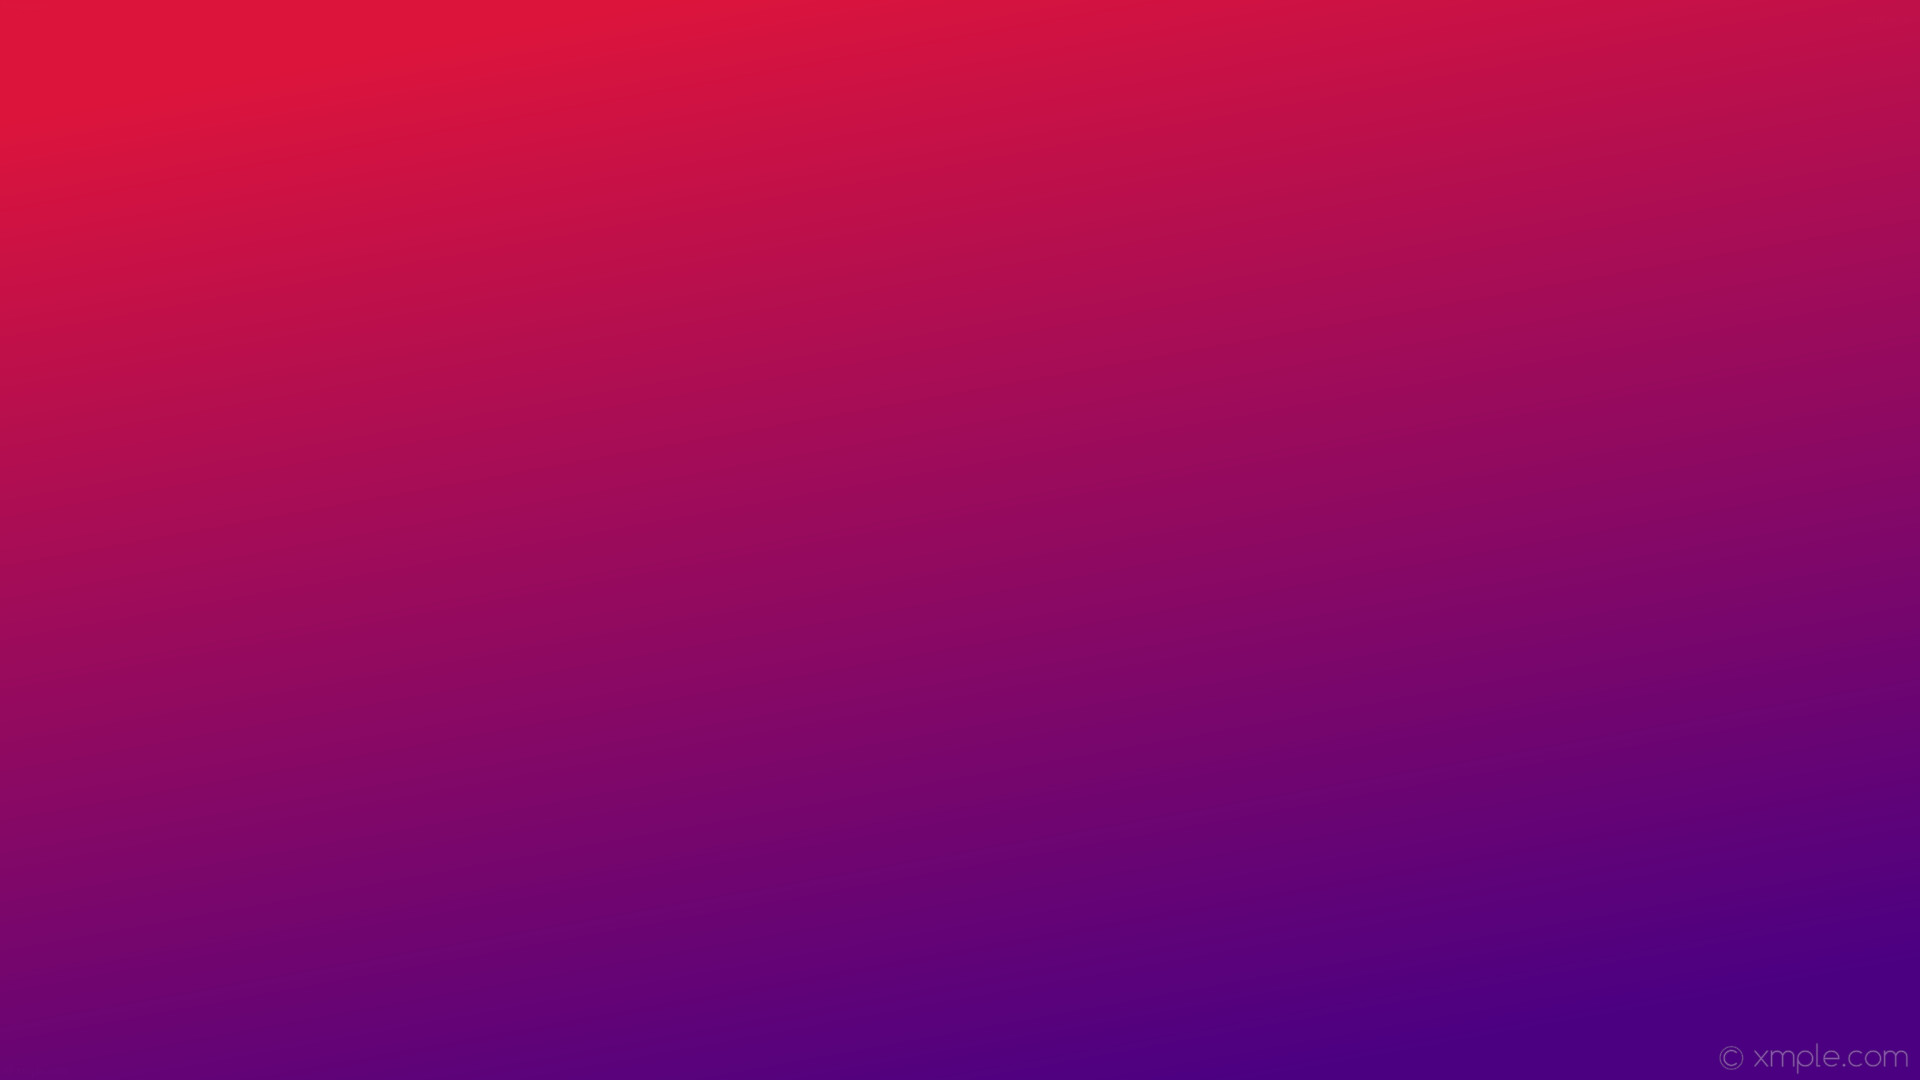 Wallpaper linear red gradient purple crimson indigo #dc143c b0082 120